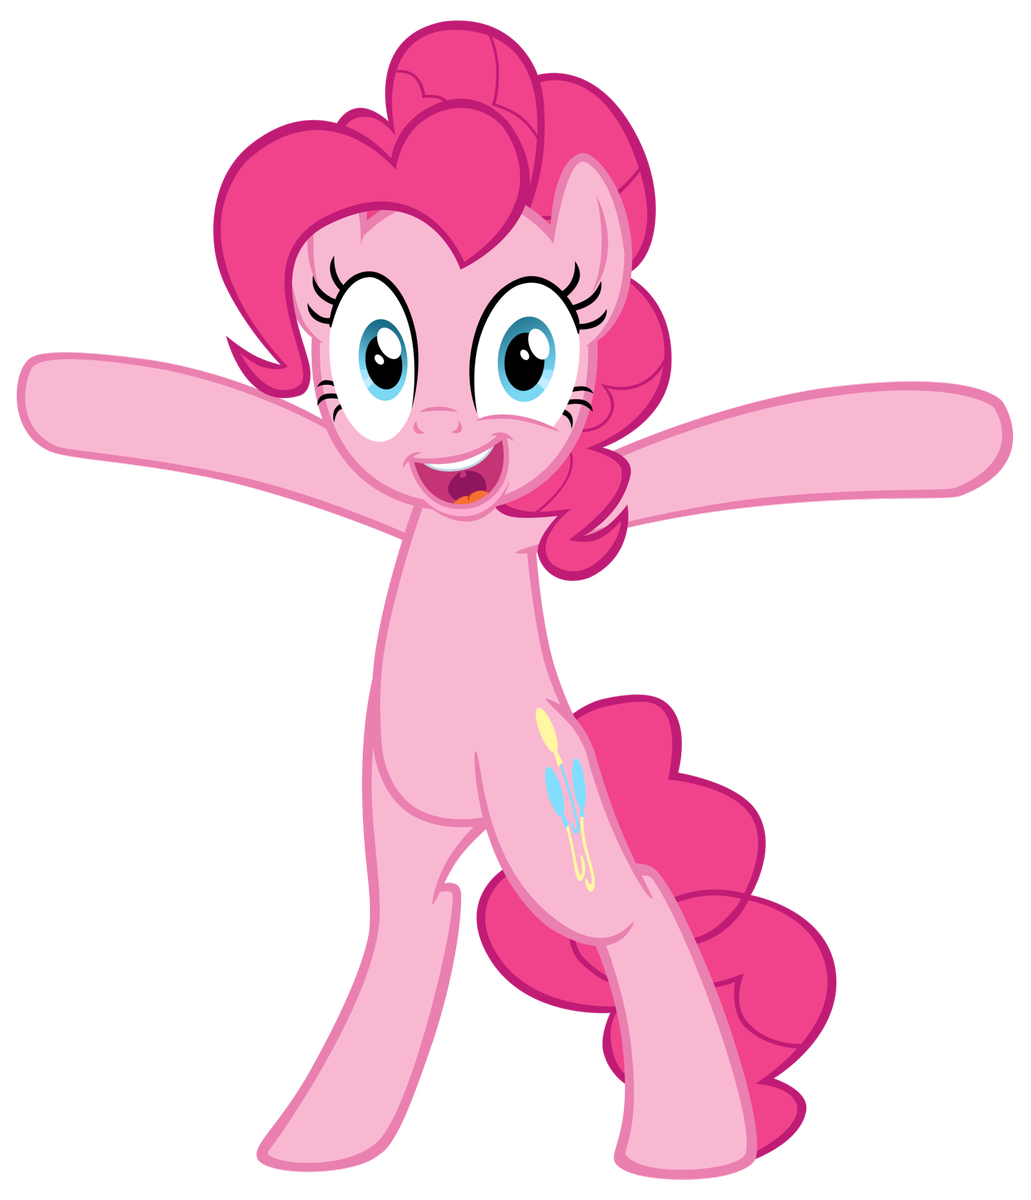 Pinkie pie wanna hug you by lazy joe-d52